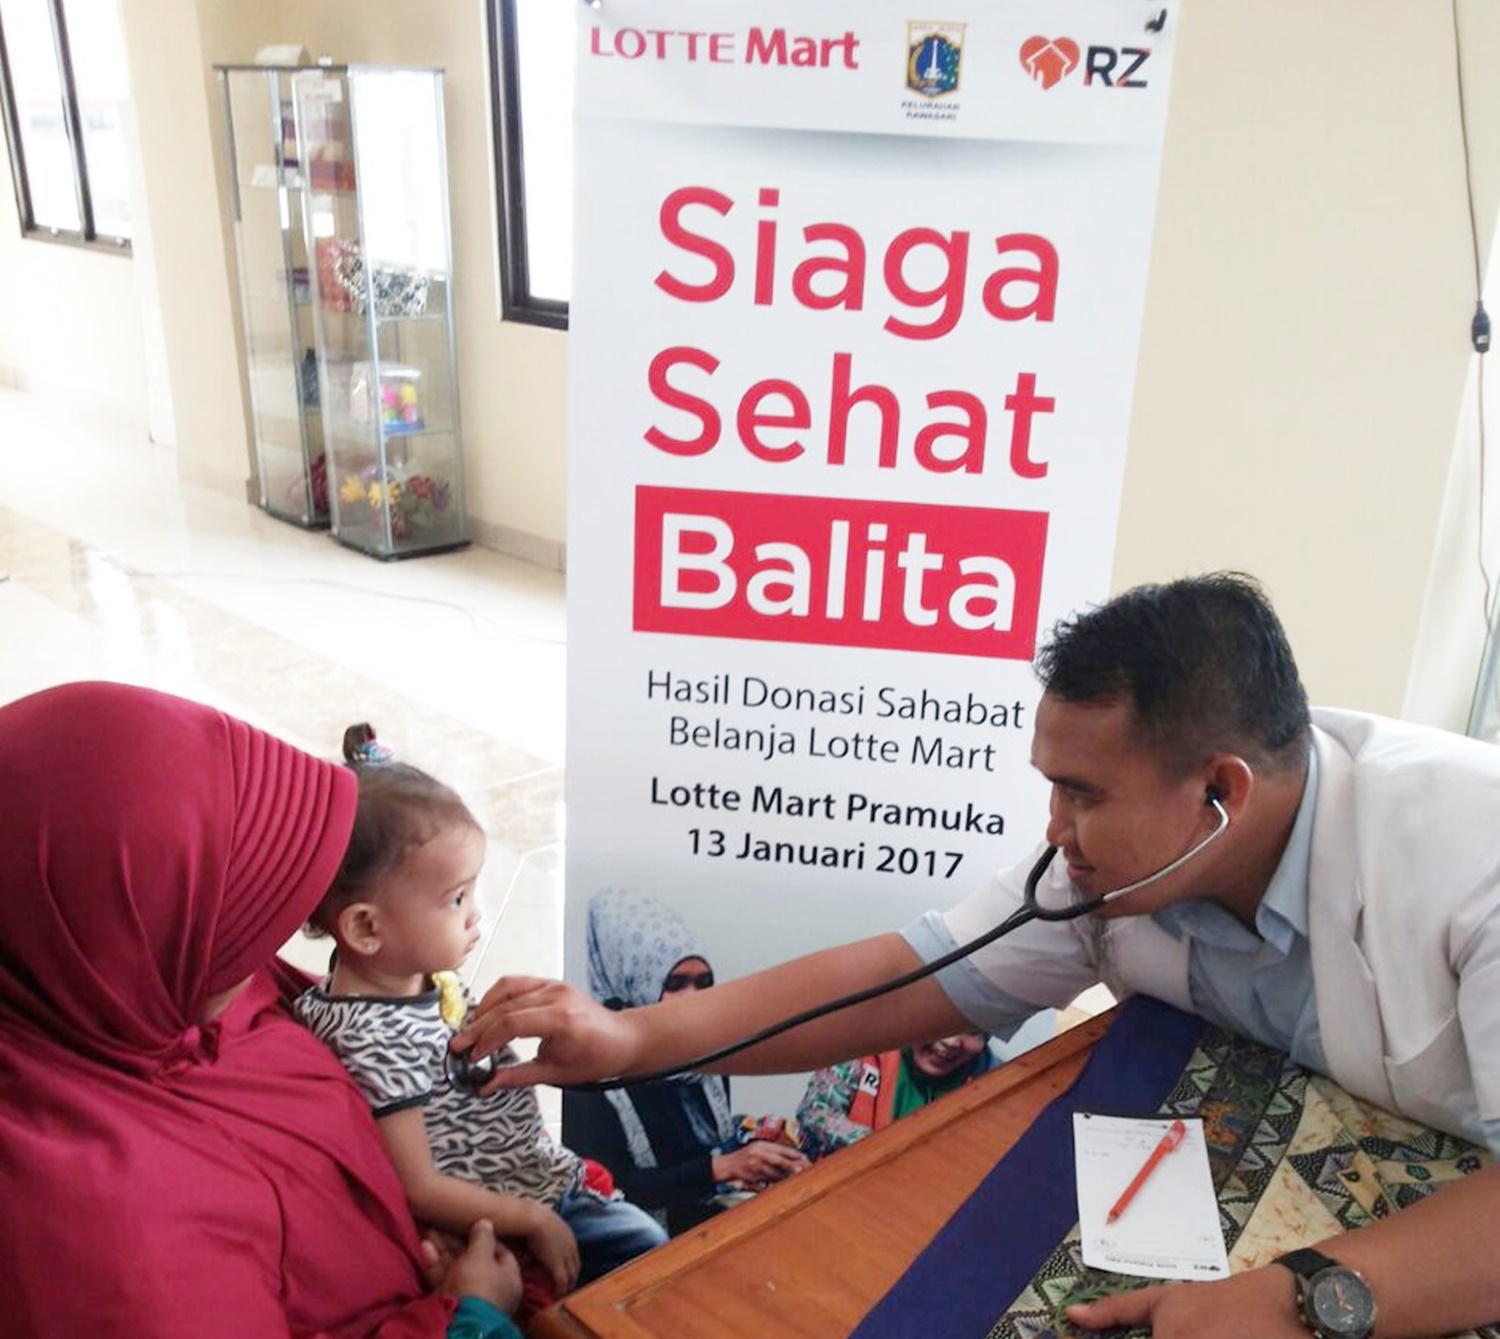 Rumah Zakat dan Lotte Mart Adakan Siaga Sehat Balita di Jakarta